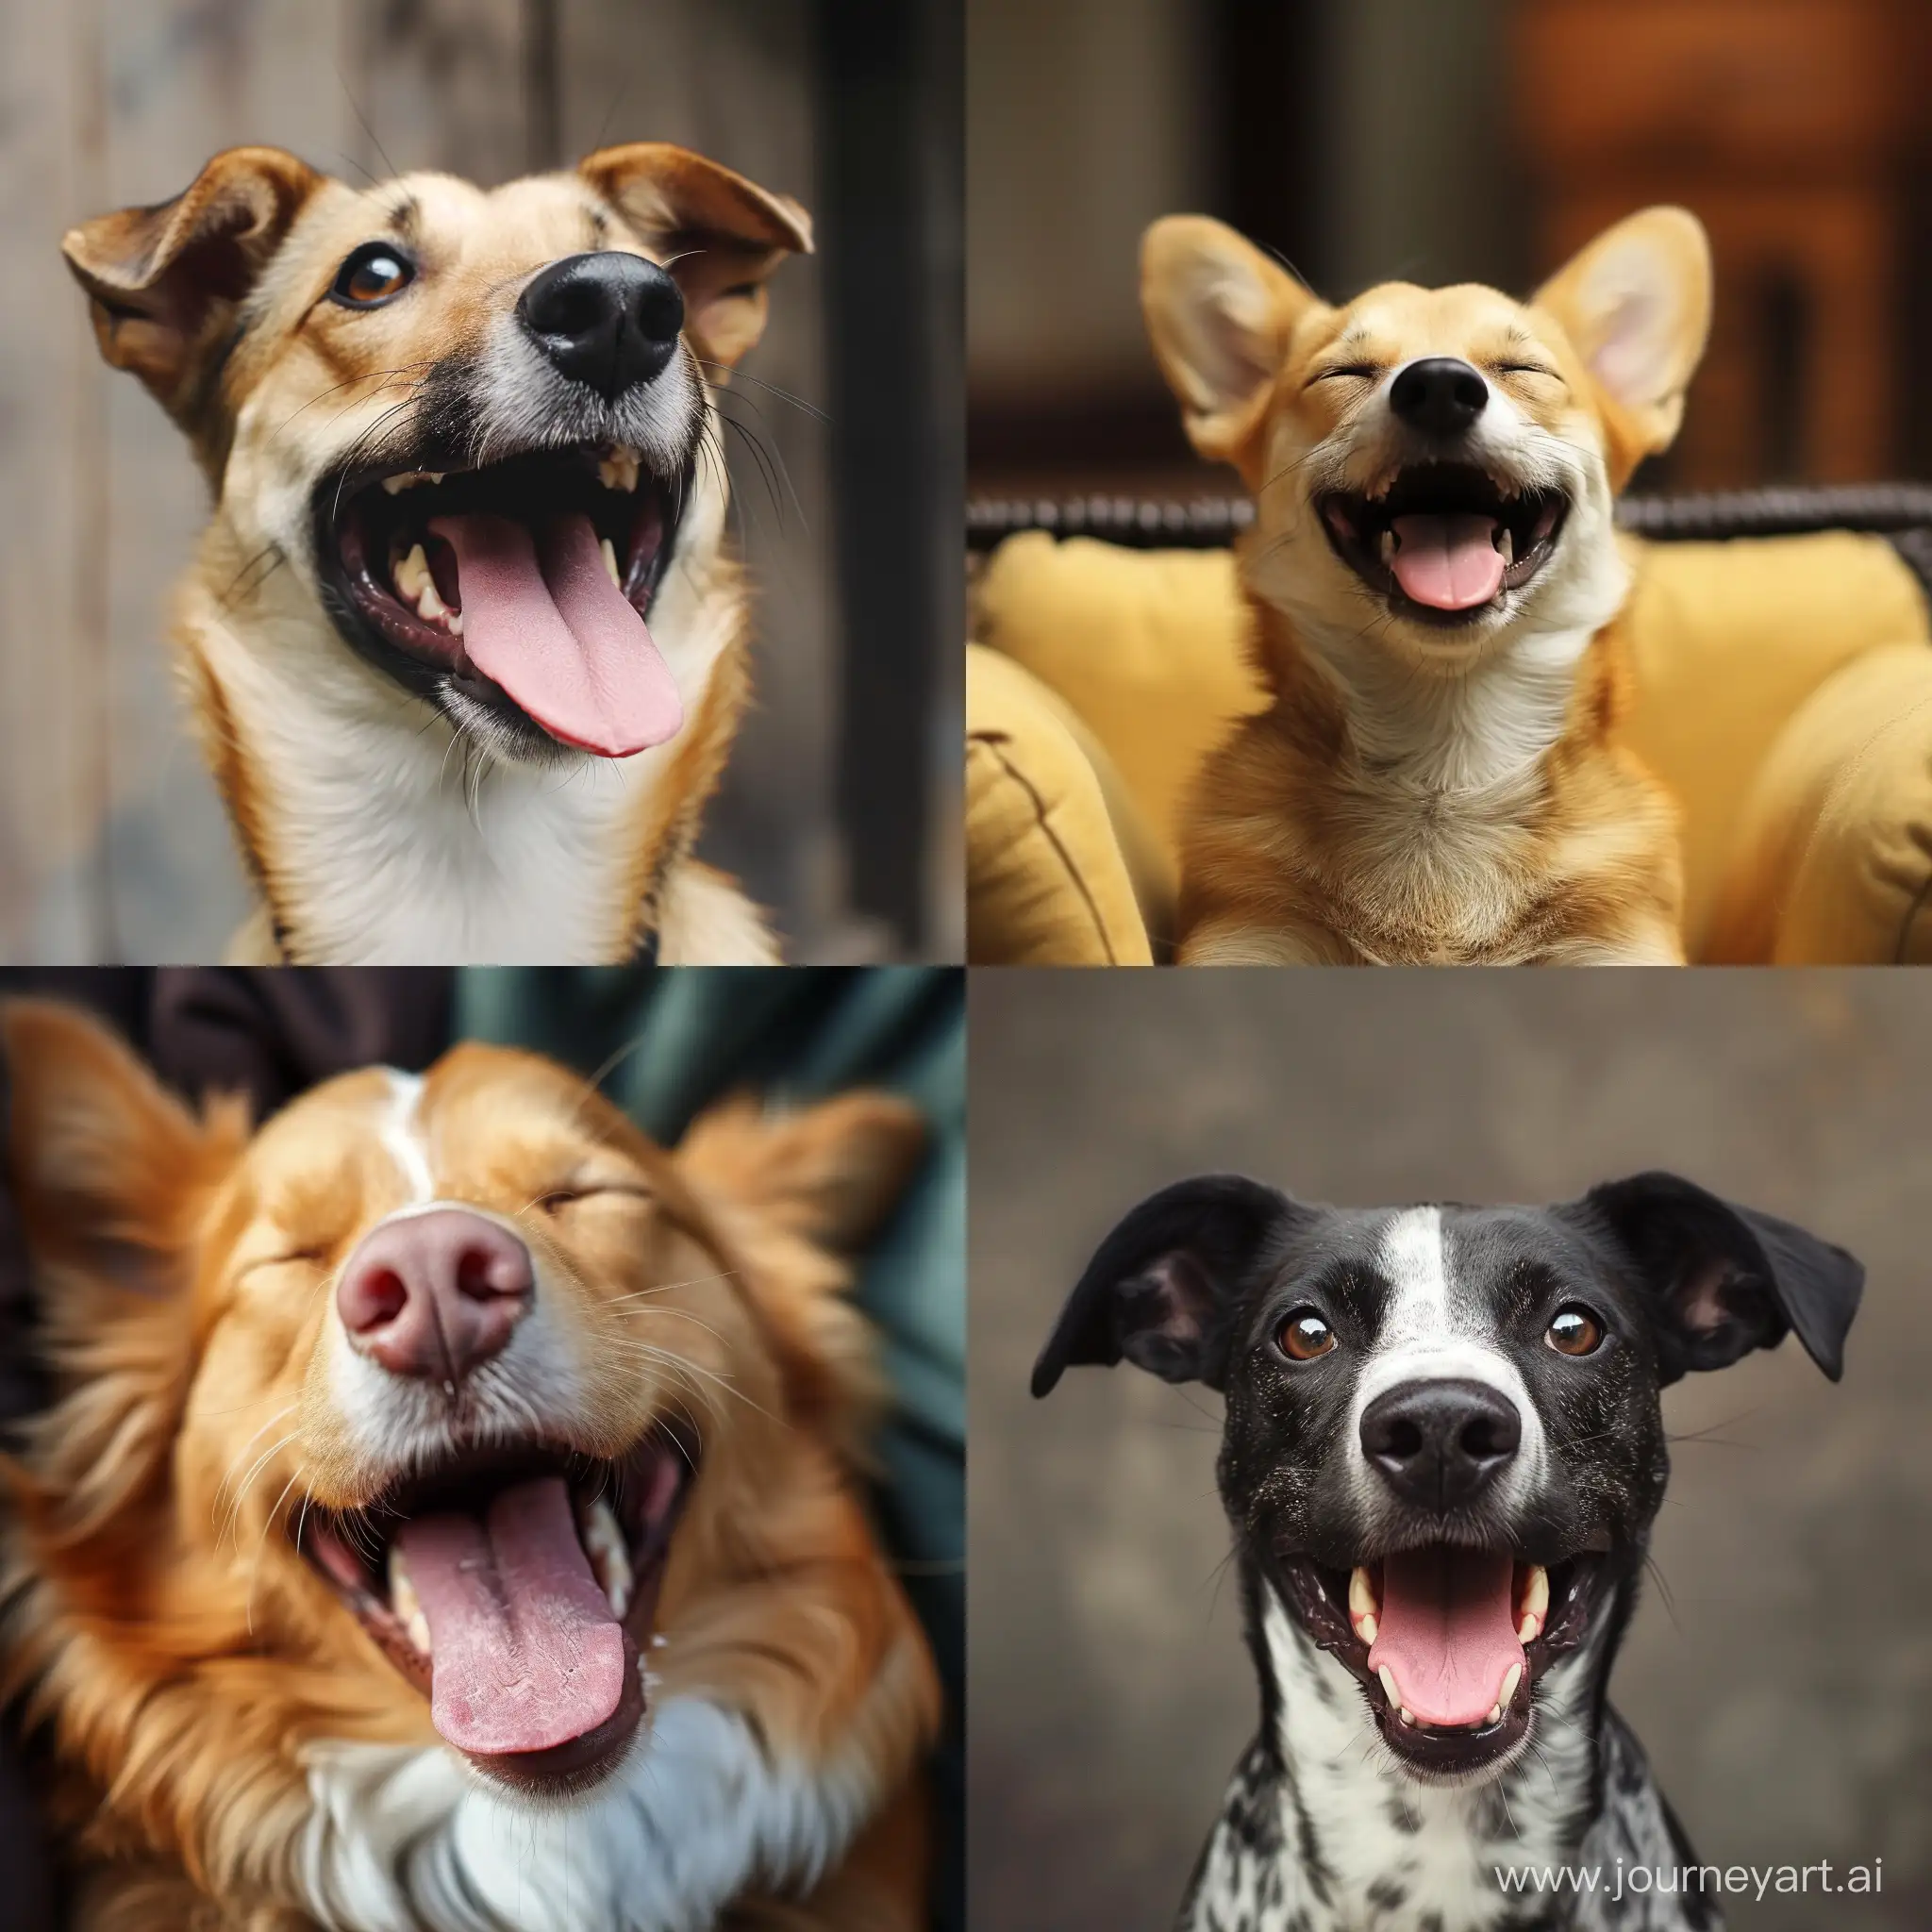 Joyful-Canine-Bliss-Cheerful-Dog-in-Vibrant-Harmony